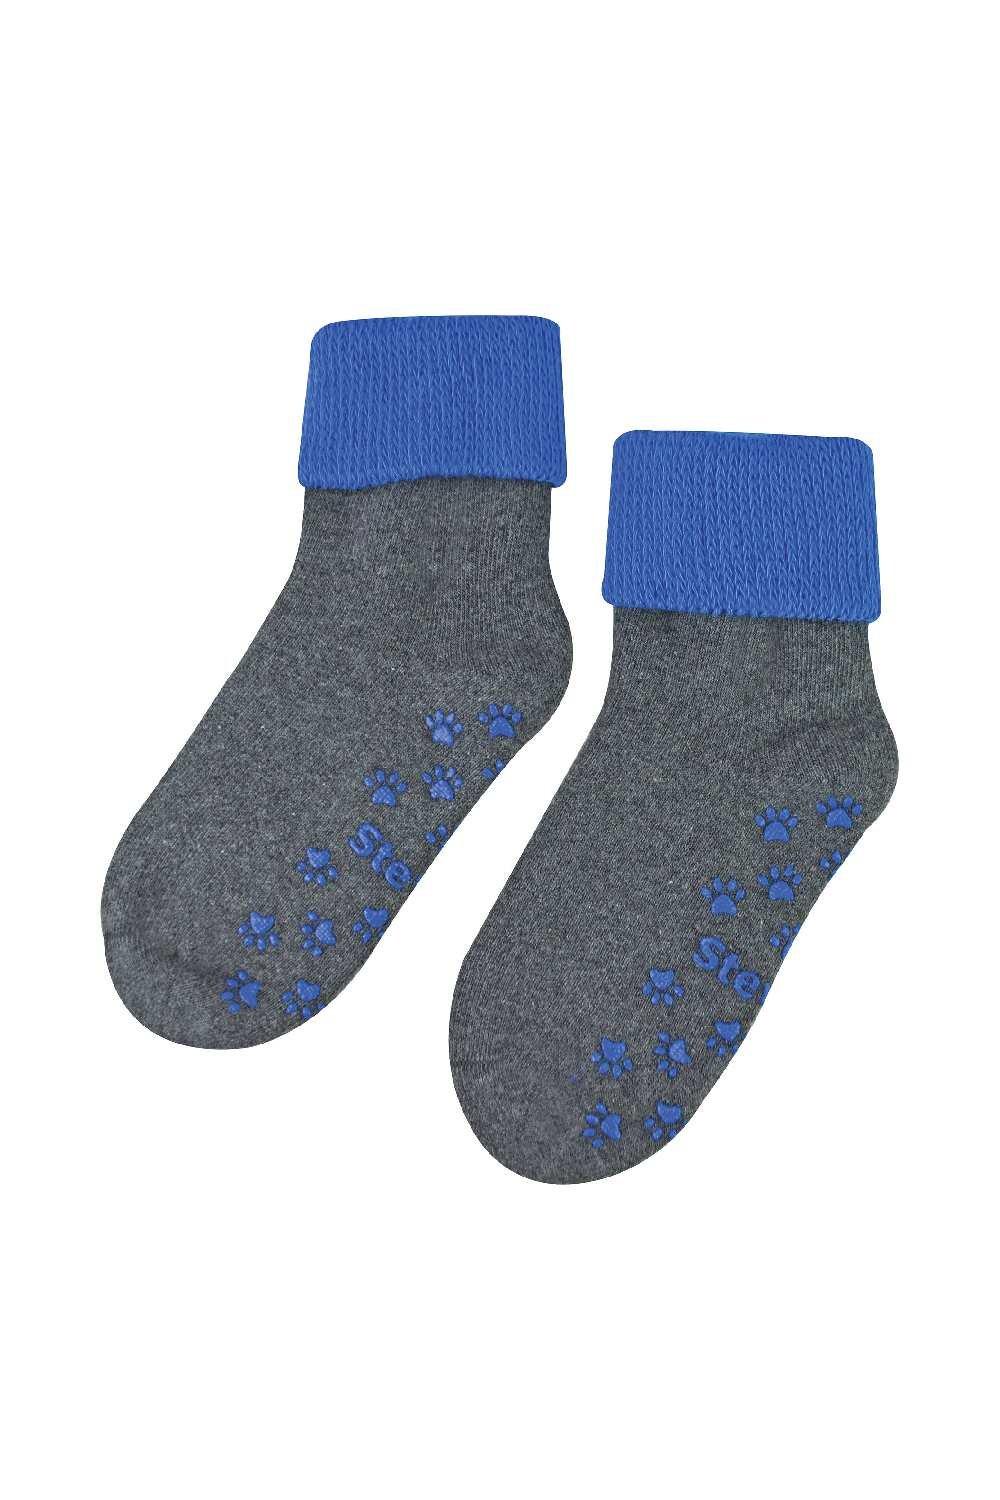 Warm Lightweight Cute Design Non-Slip Socks with Grips